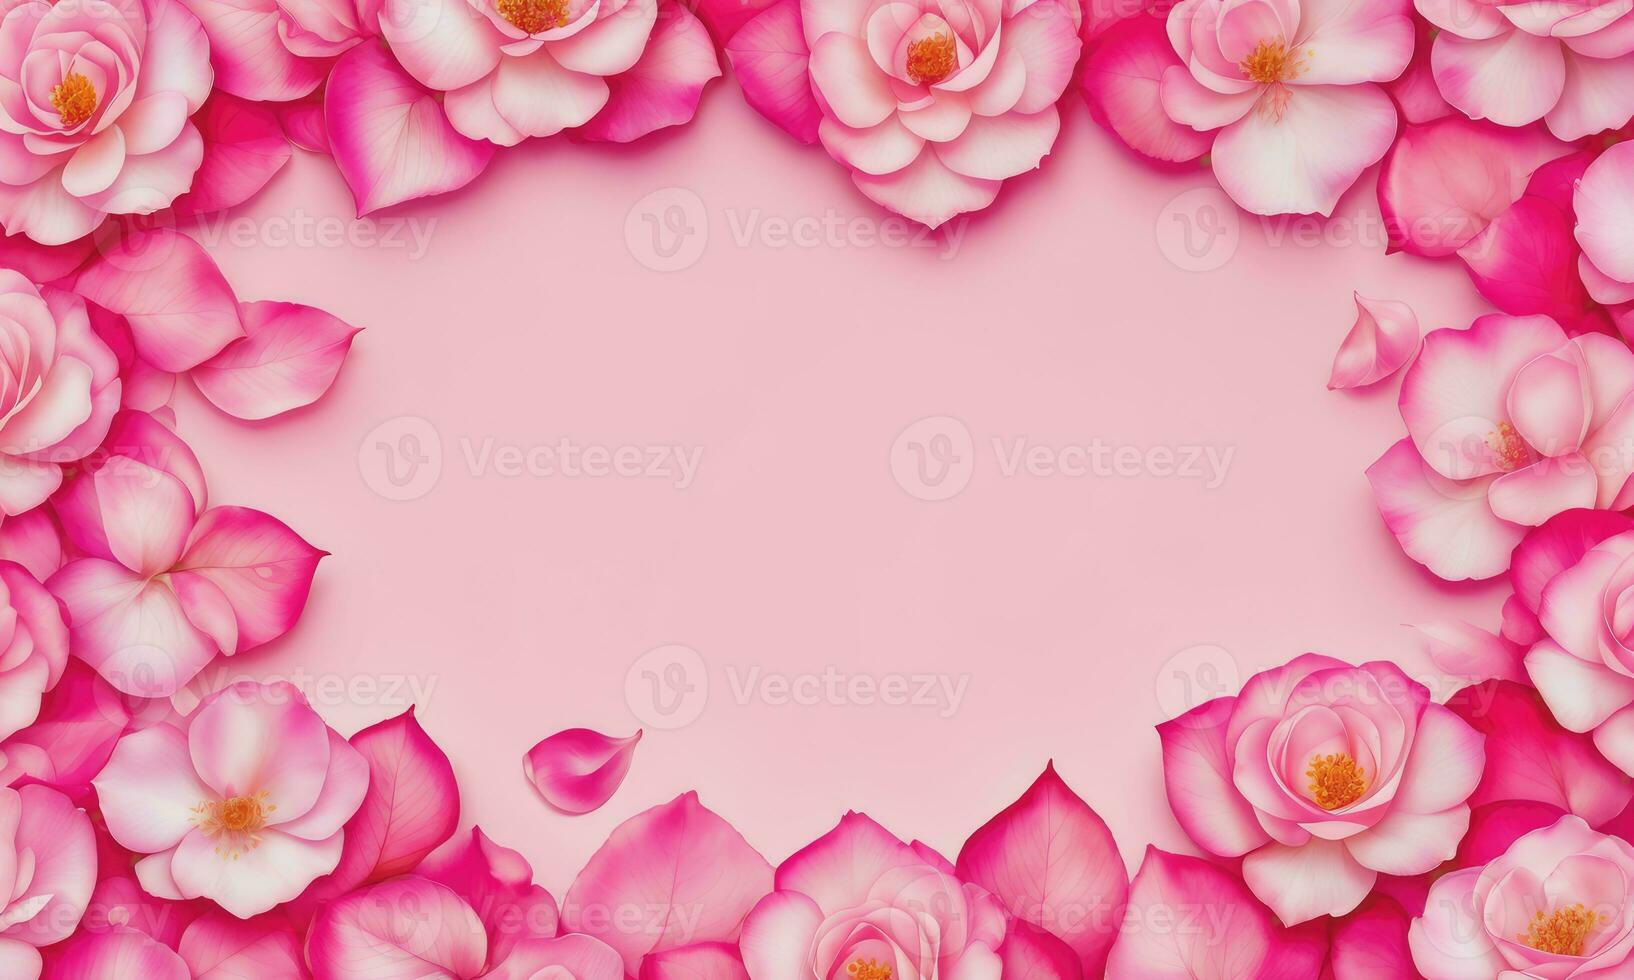 Pink rose petals set on pink background photo